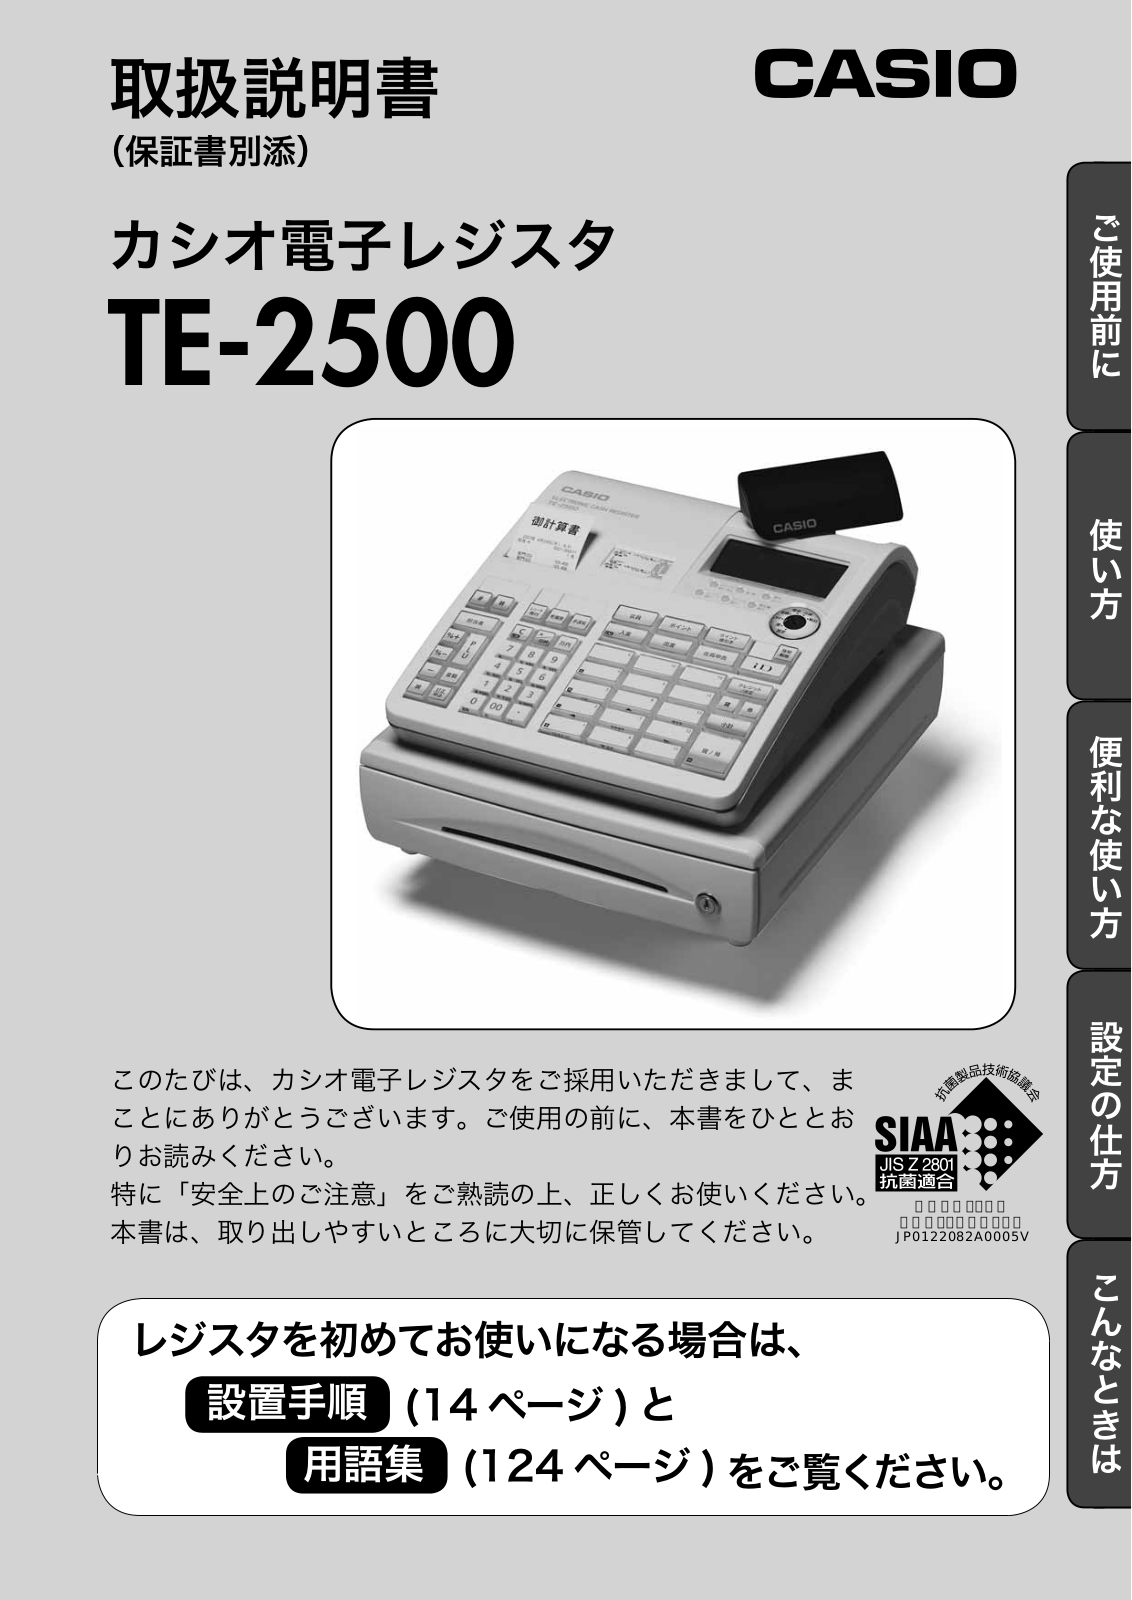 CASIO TE-2500 User Manual